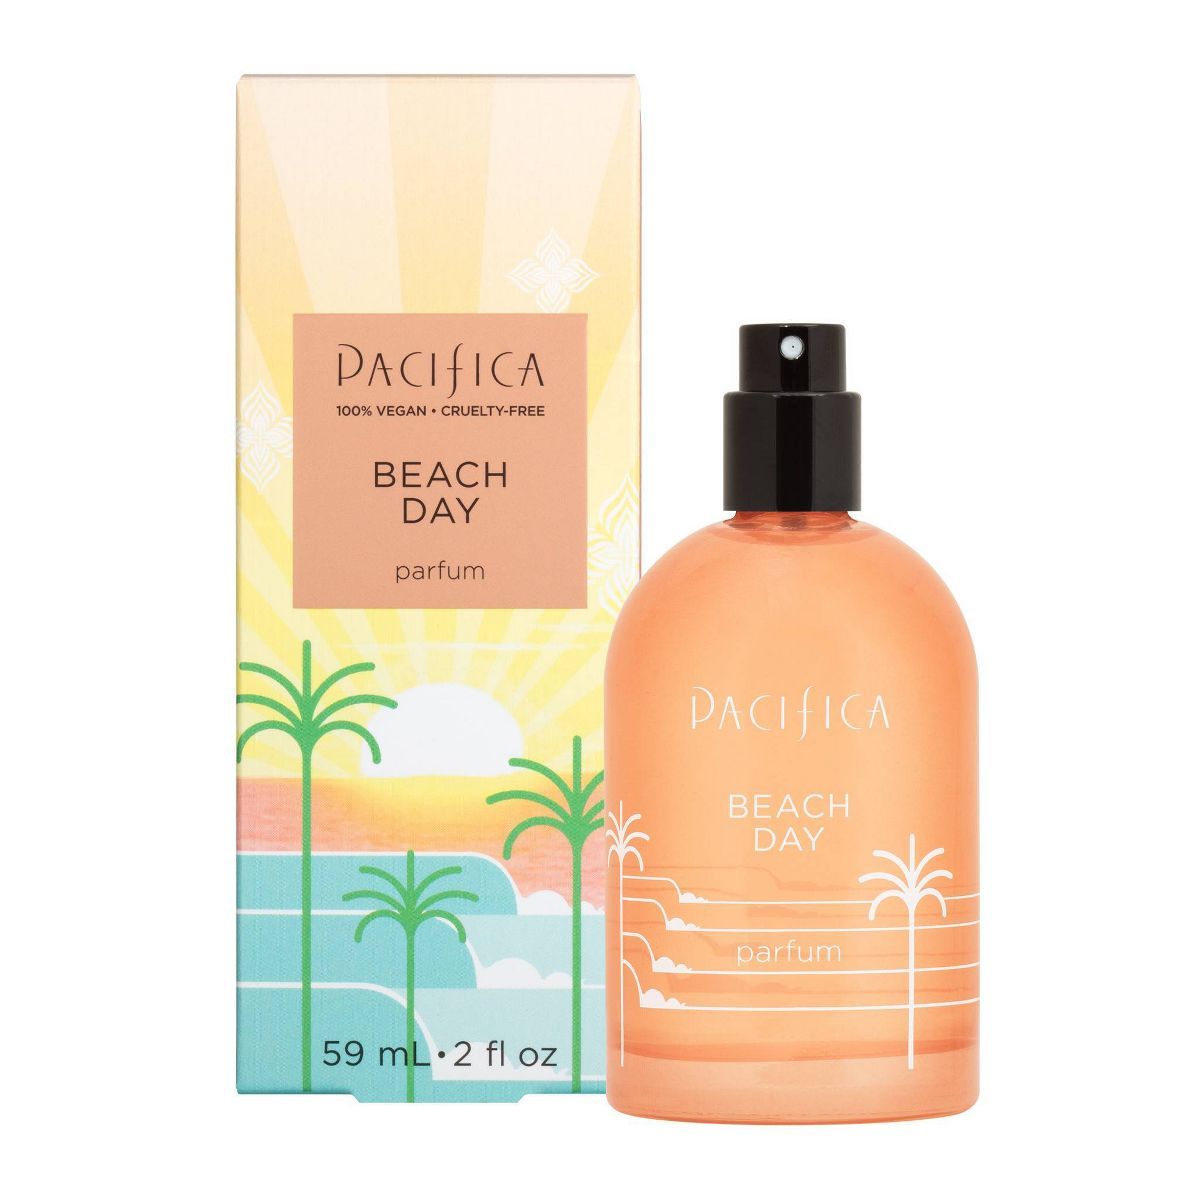 Pacifica Beach Day Spray Perfume - 2 fl oz | Target